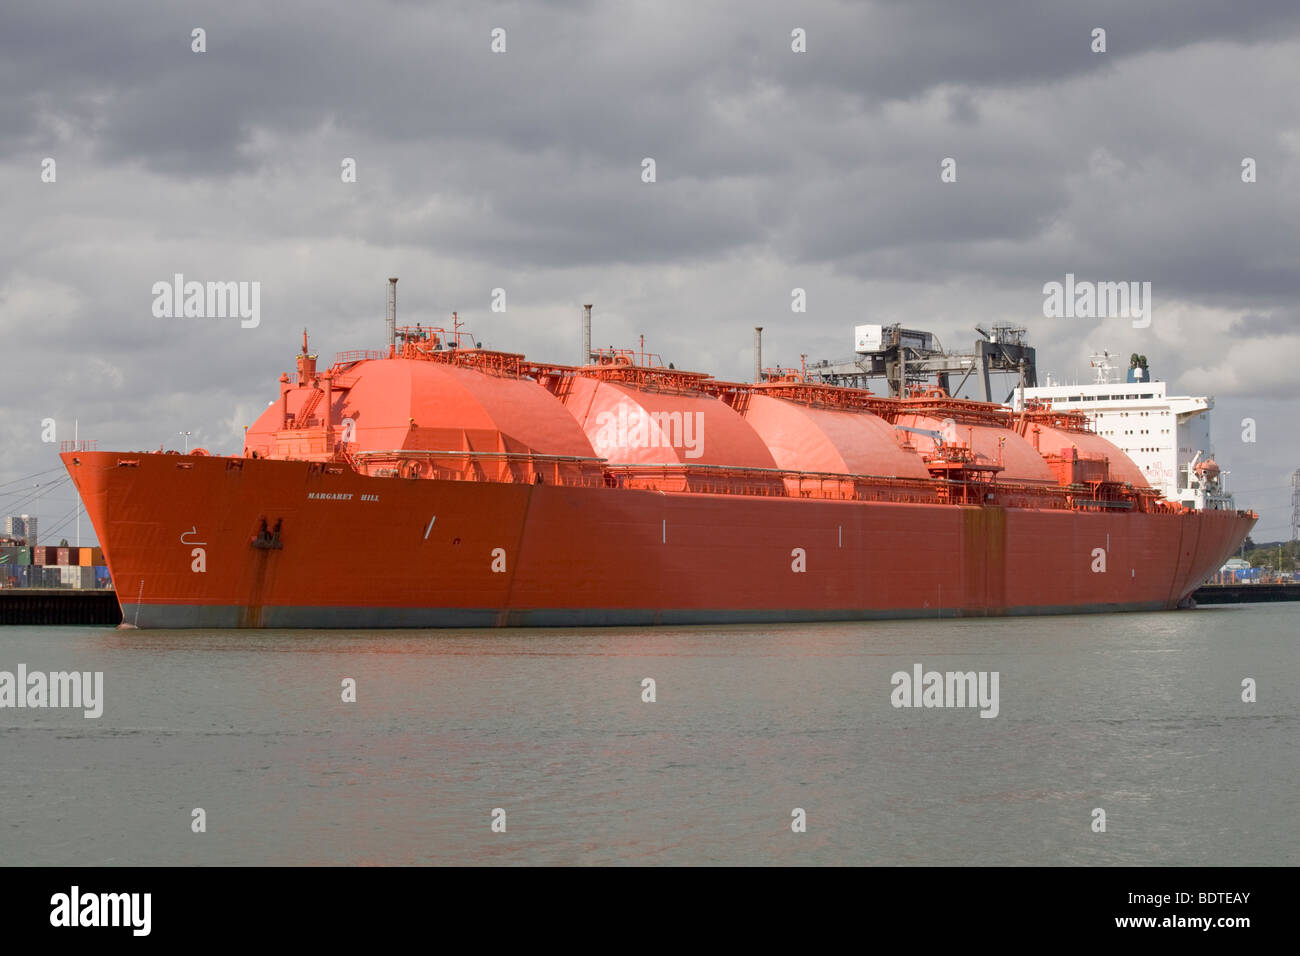 LNG tanker ship Margaret Hill in Southampton docks Stock Photo